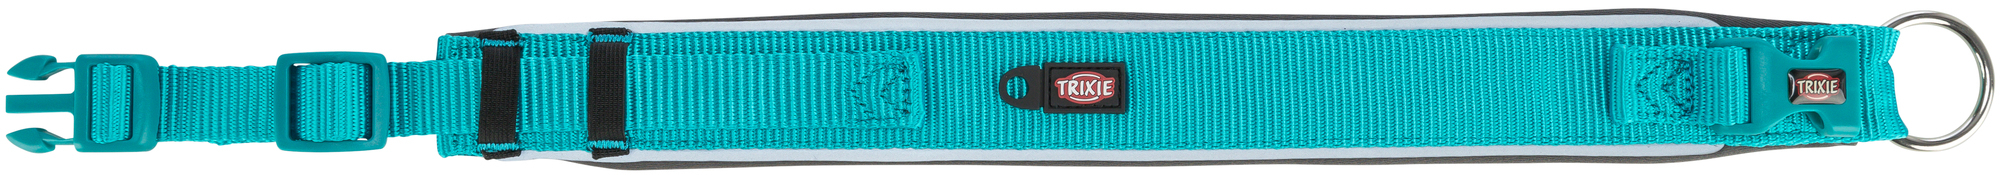 Trixie Premium coleira extra larga - Oceano/Grafite Cinzento